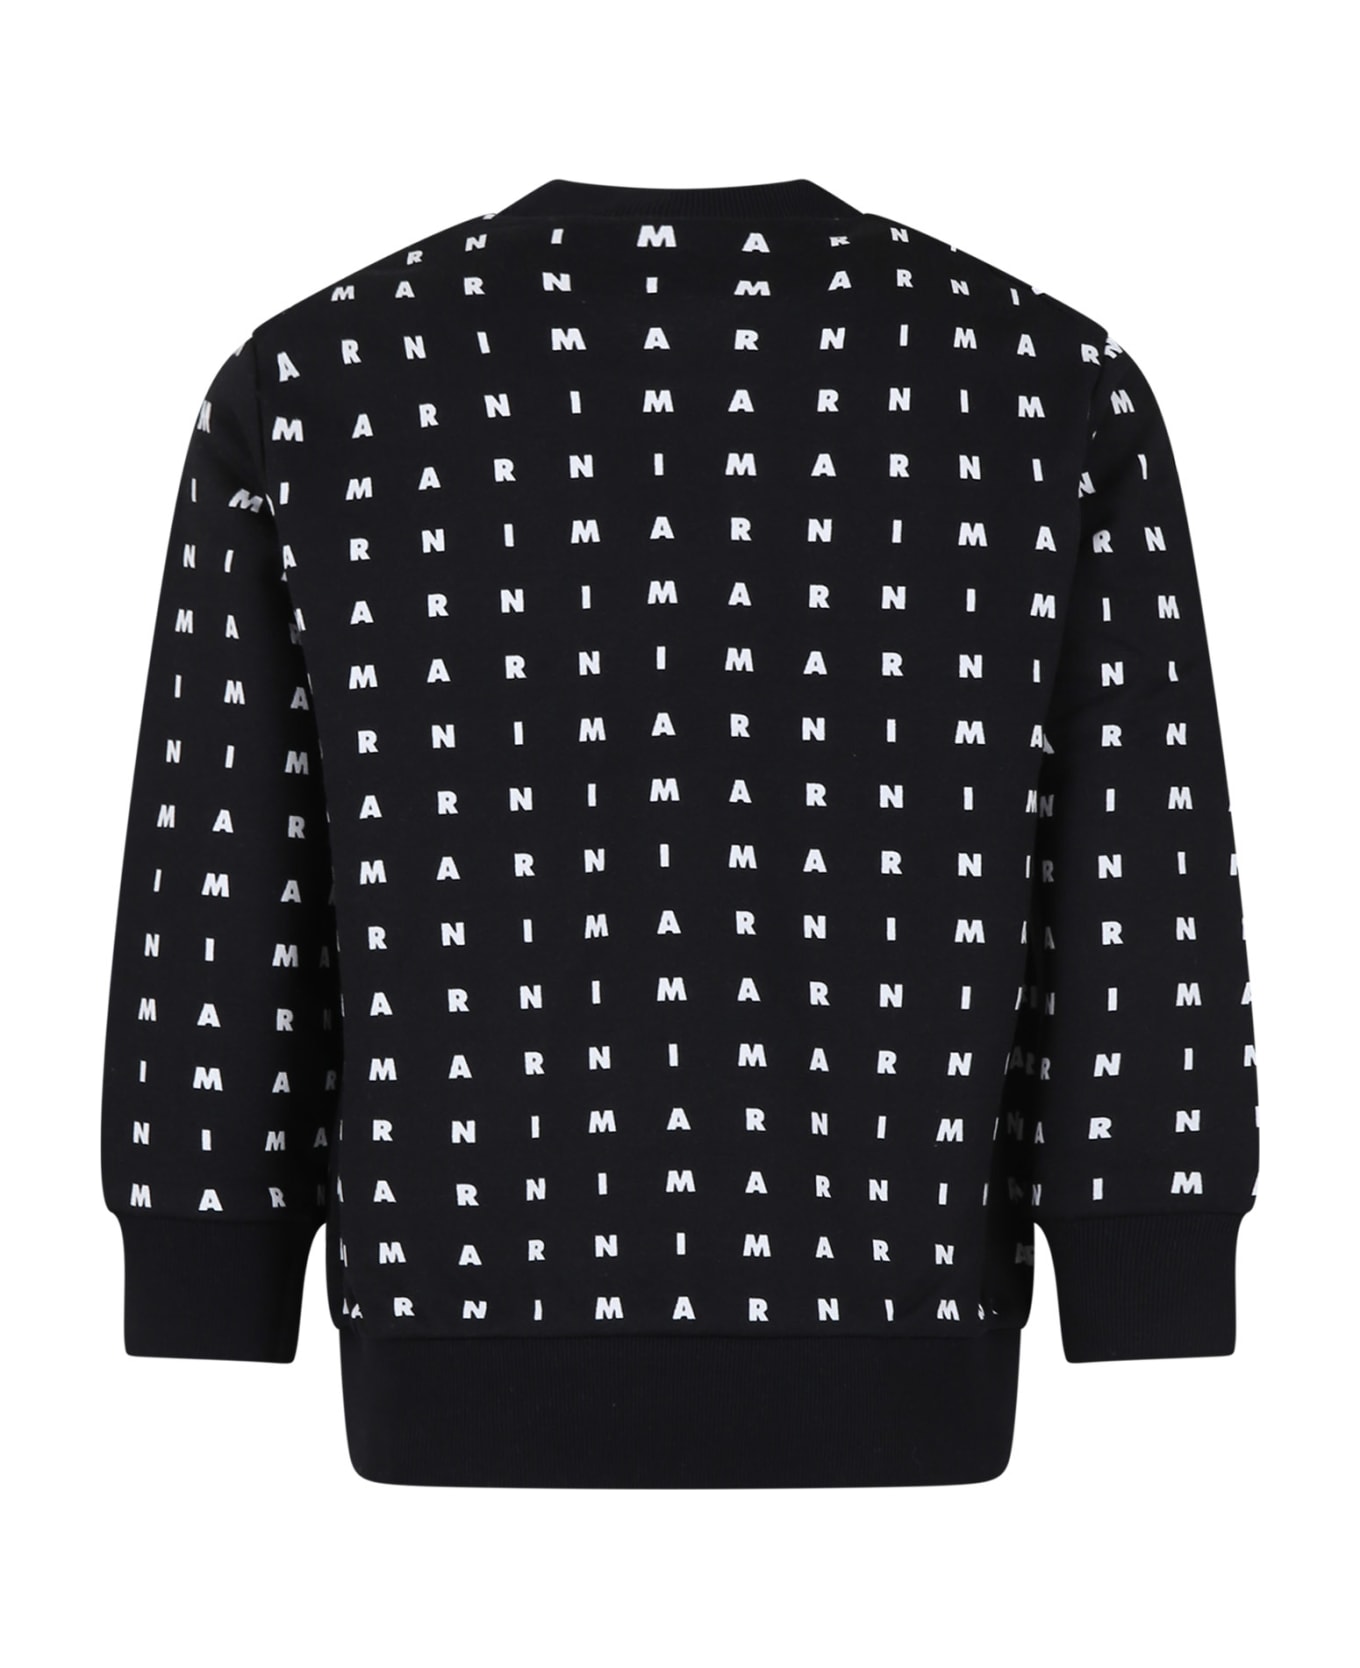 Marni Black Sweatshirt For Kids With Logo - Black